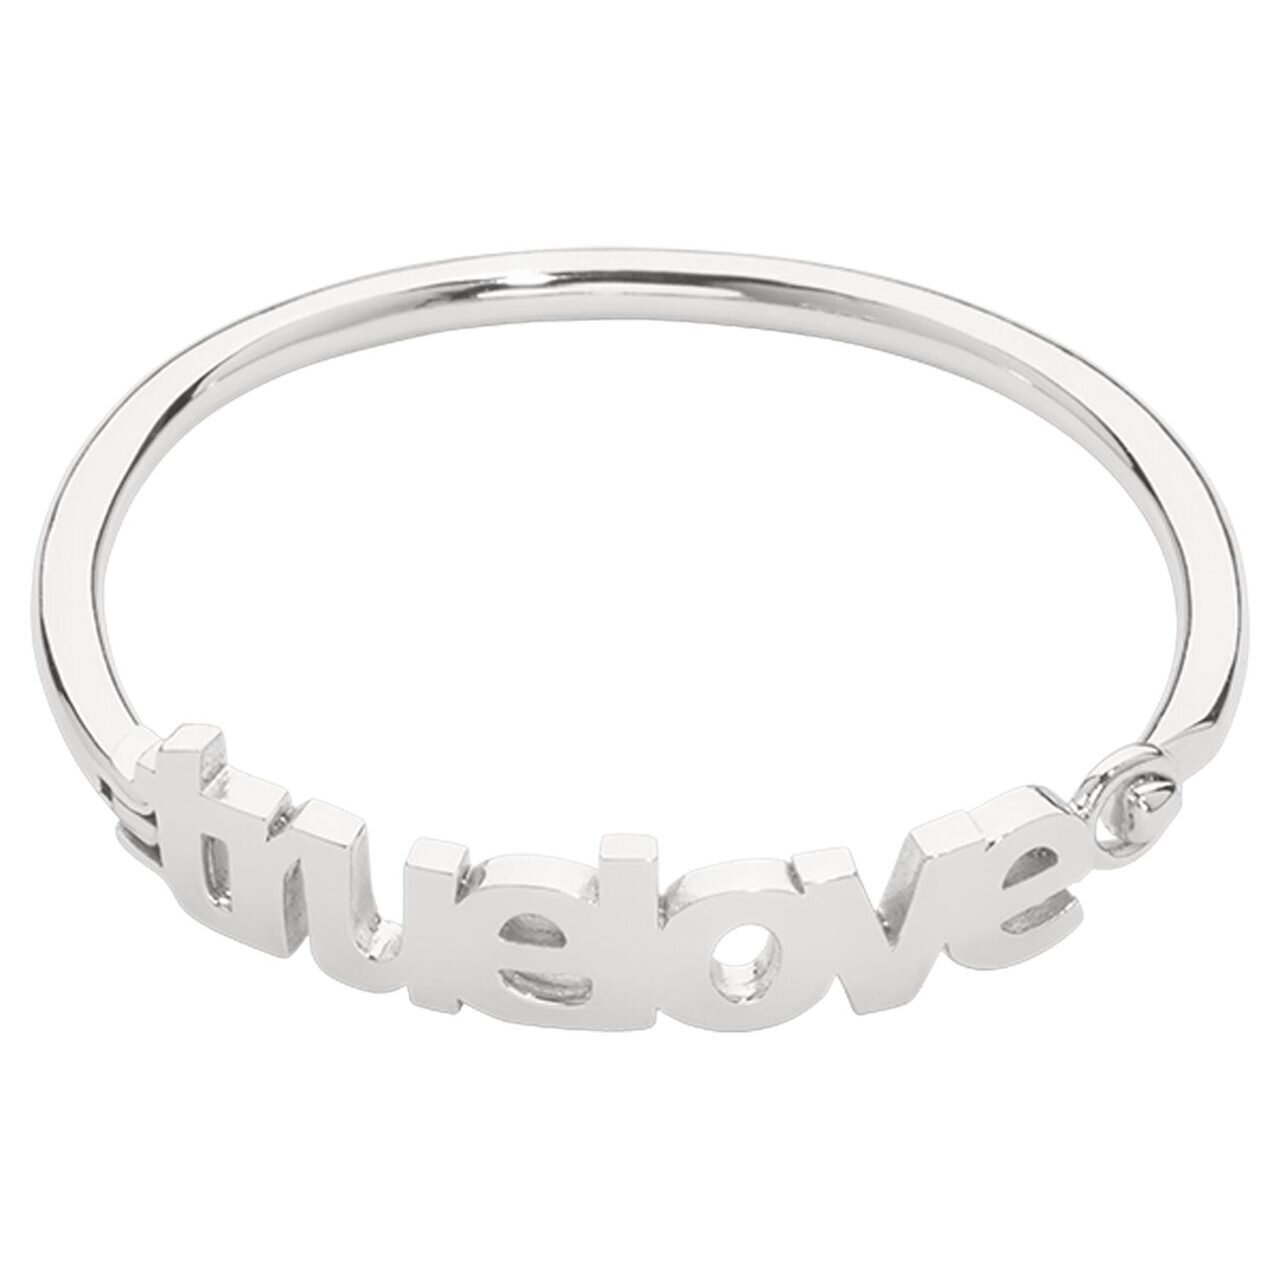 Nikki Lissoni Bracelet with True Love Tag Silver-plated 17cm B1134S17